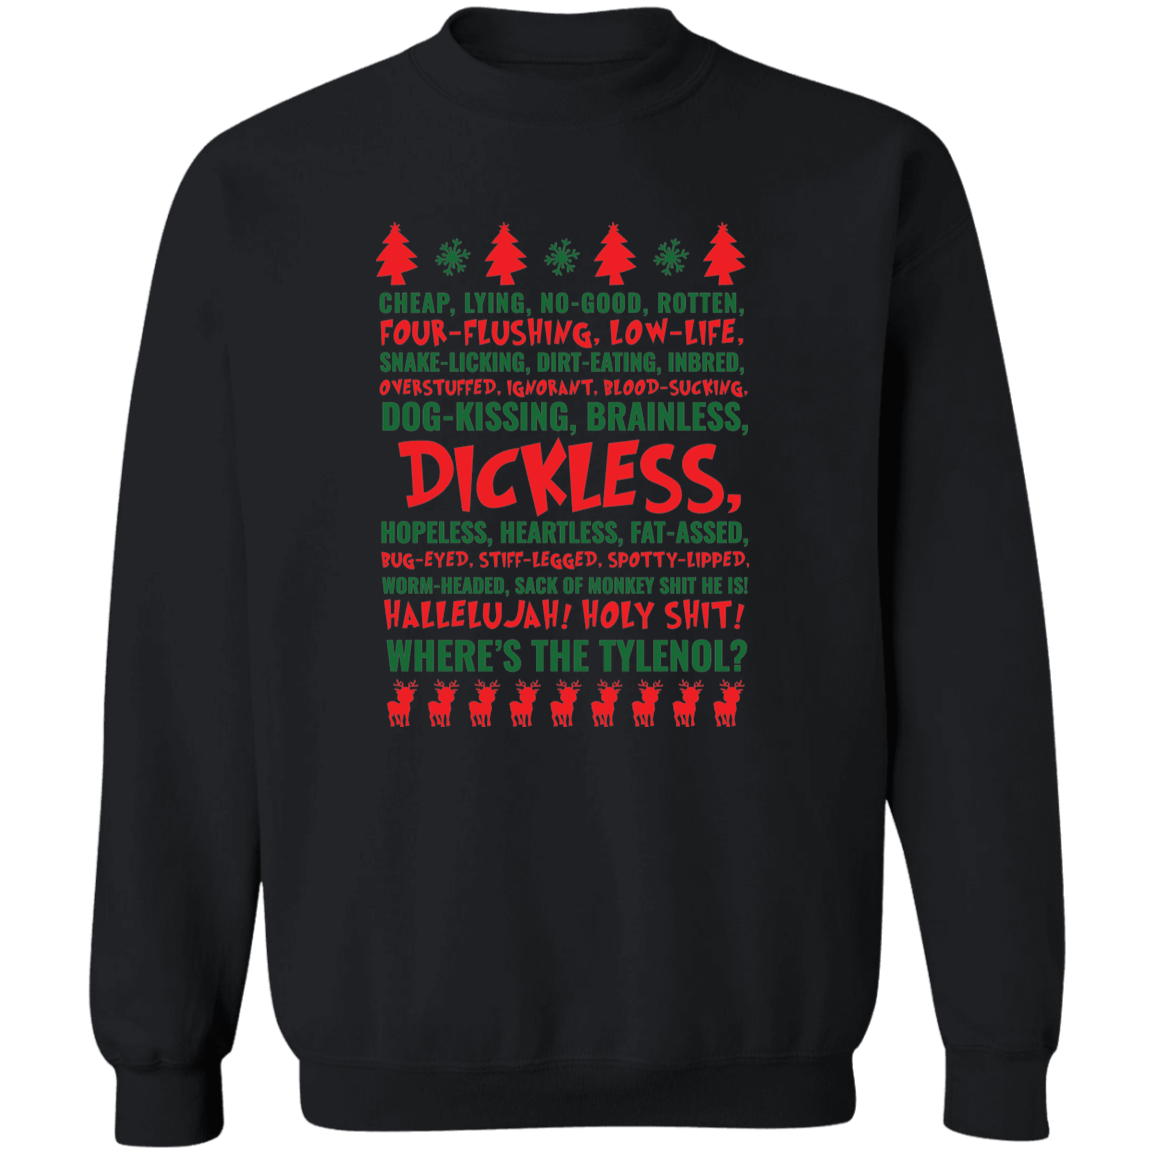 Dickless Crewneck Pullover Sweatshirt